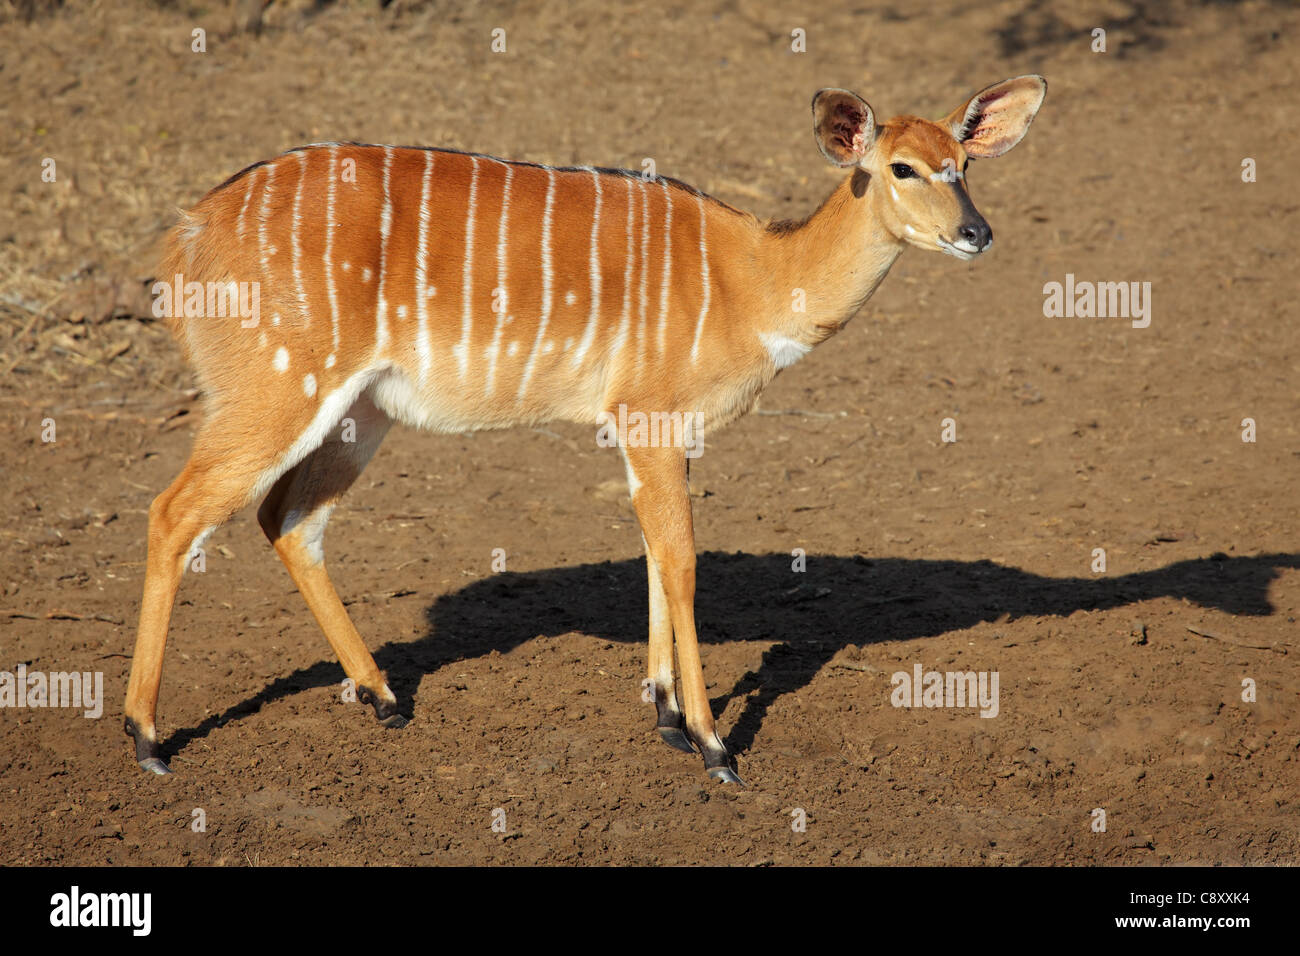 Antilope Nyala femelle (Tragelaphus angasii), Mkuze game reserve, Afrique du Sud Banque D'Images